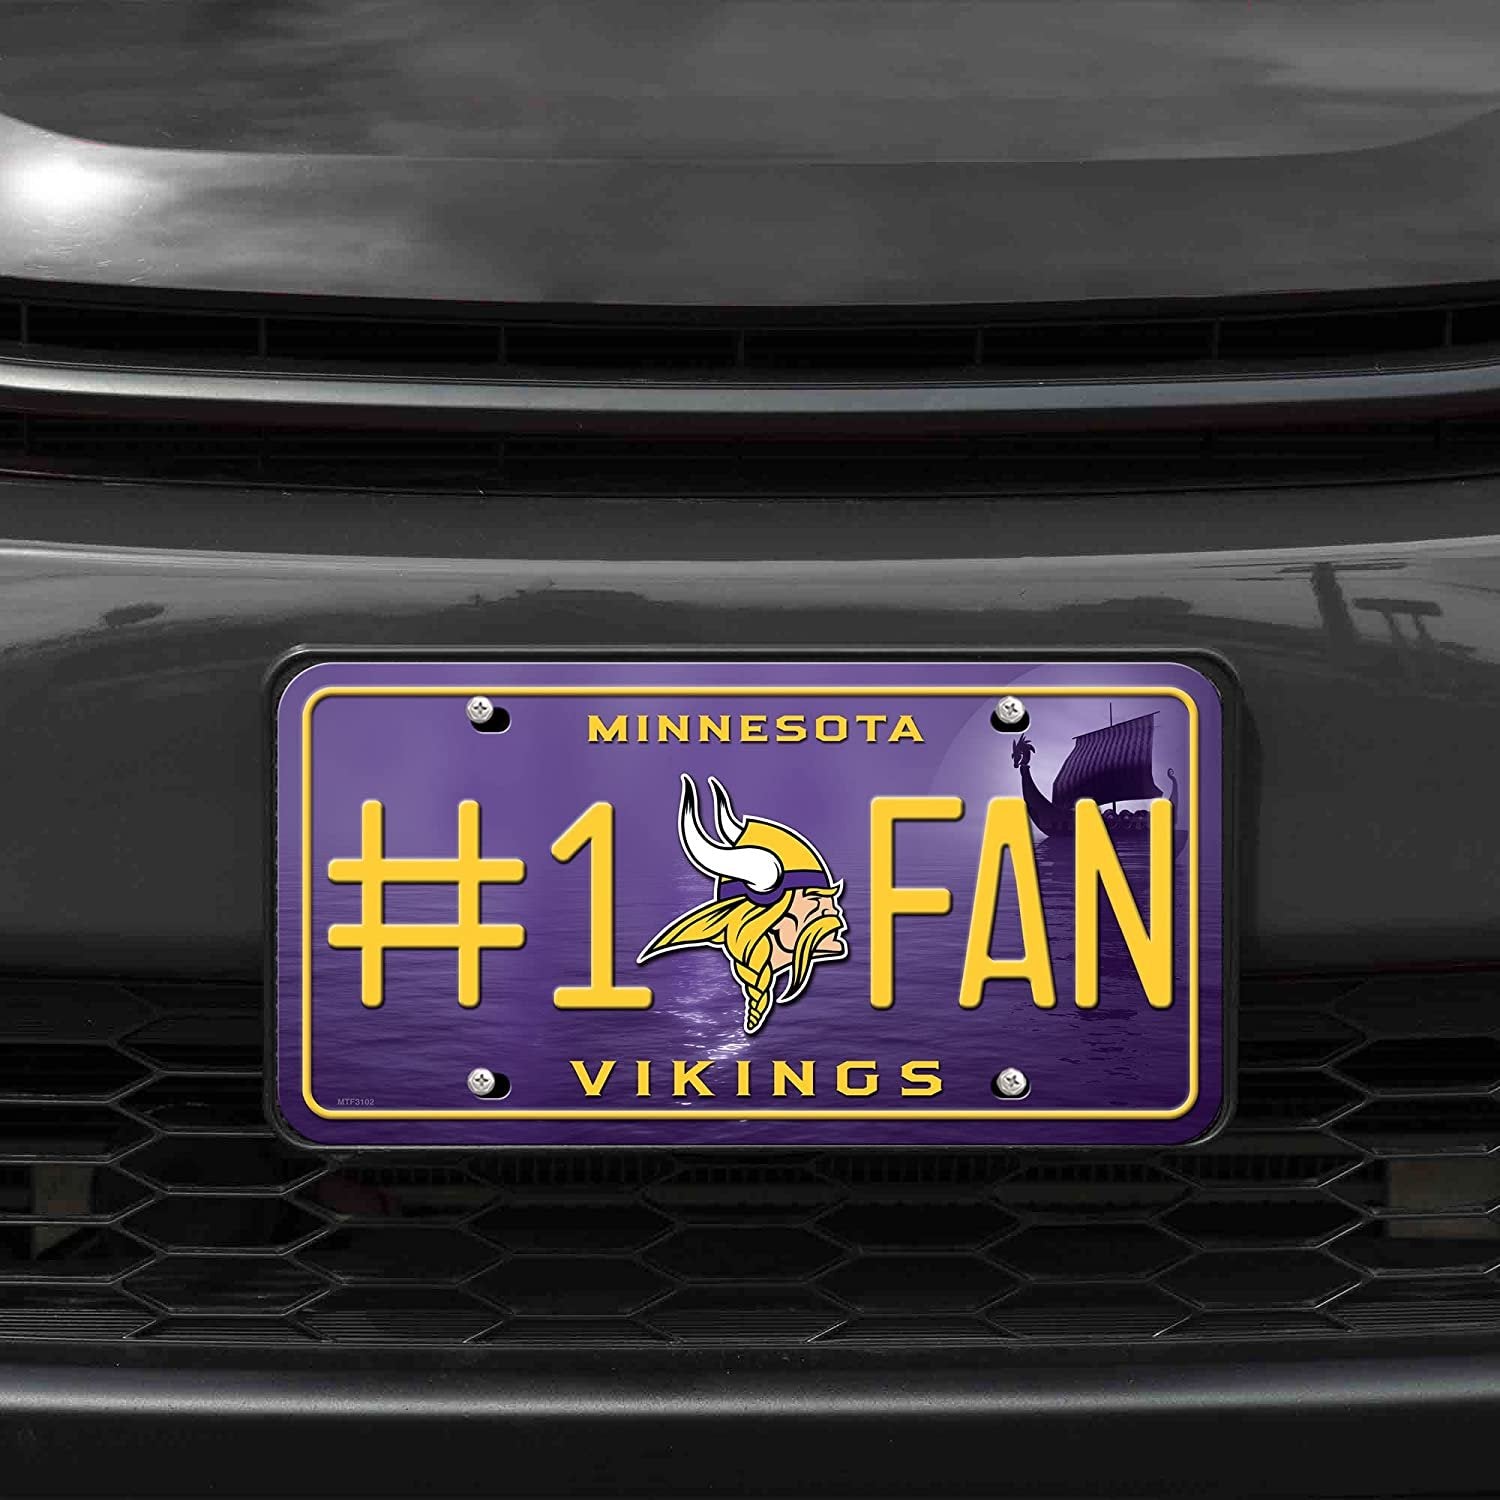 Minnesota Vikings #1 Fan Metal Tag License Plate Novelty 12x6 Inch